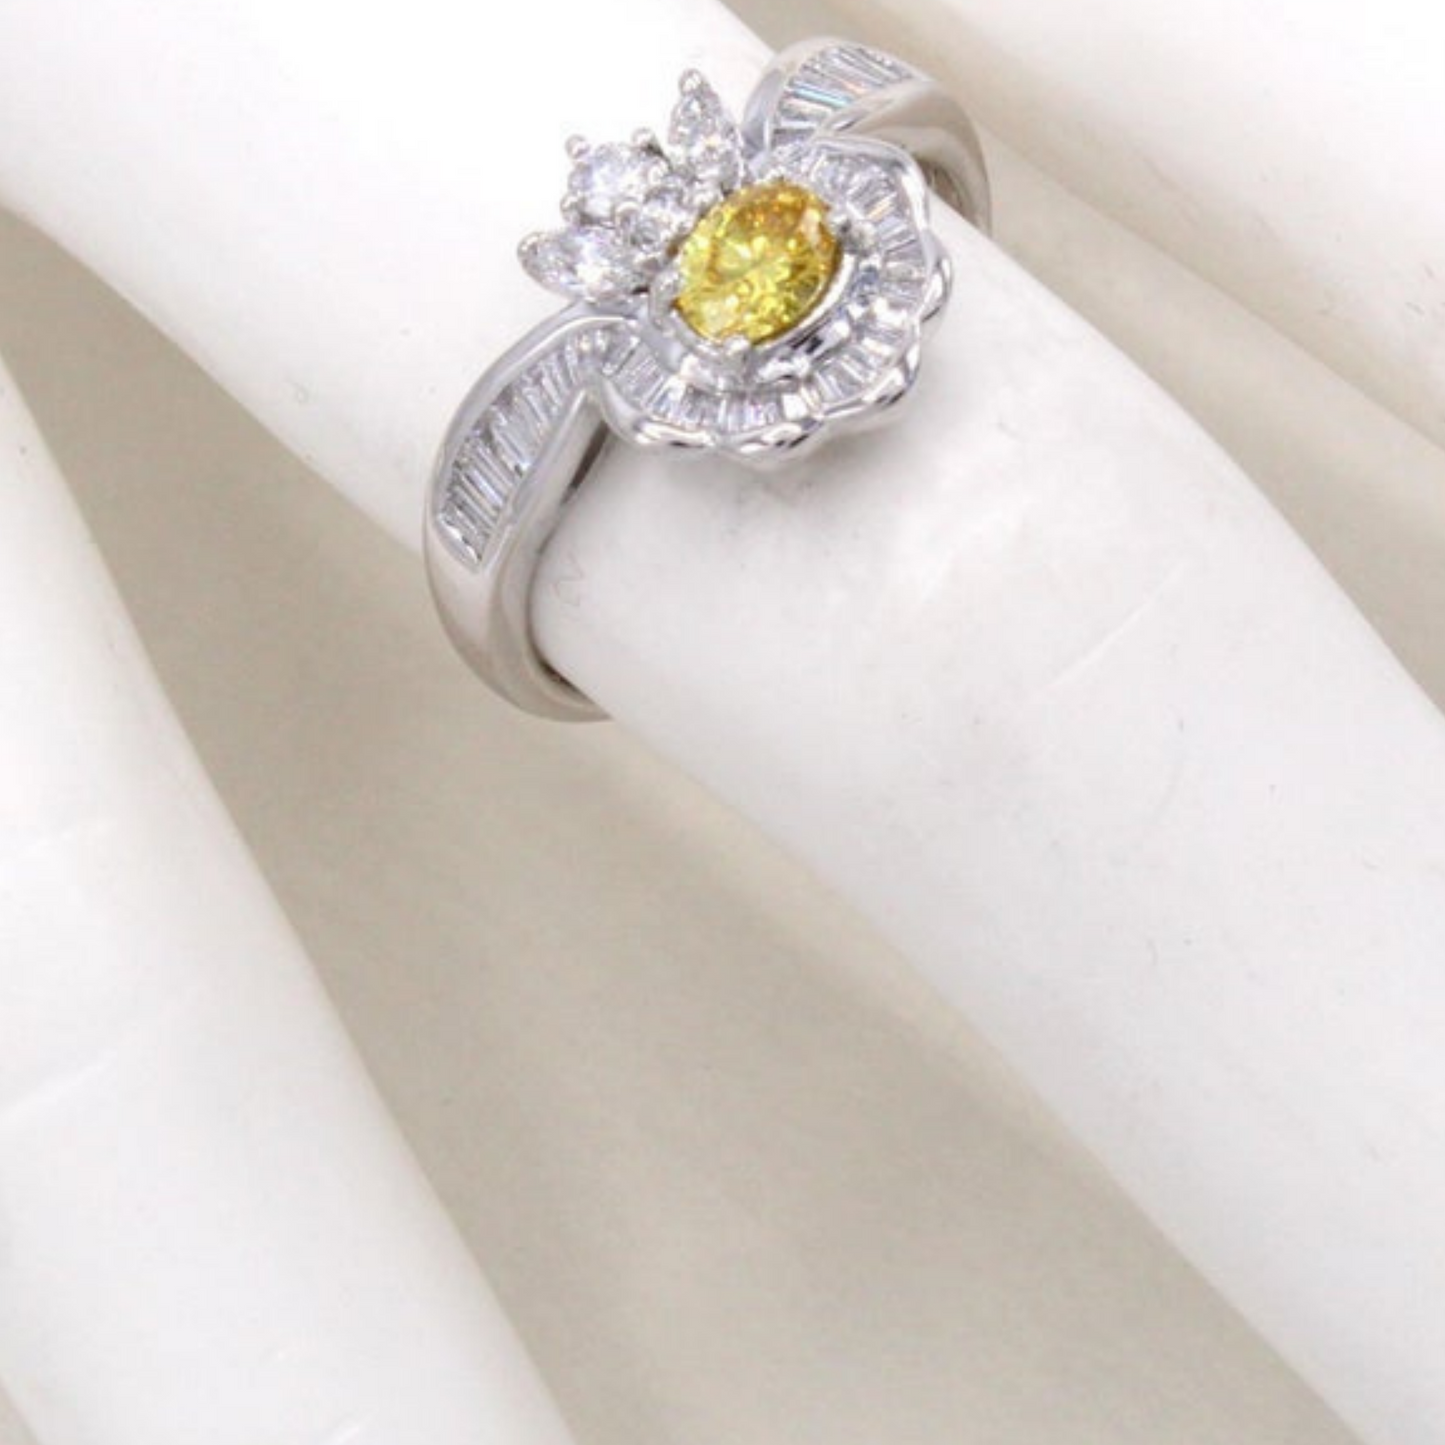 Post-1980s Platinum Fancy Vivid Orange-Yellow Diamond Ring on finger